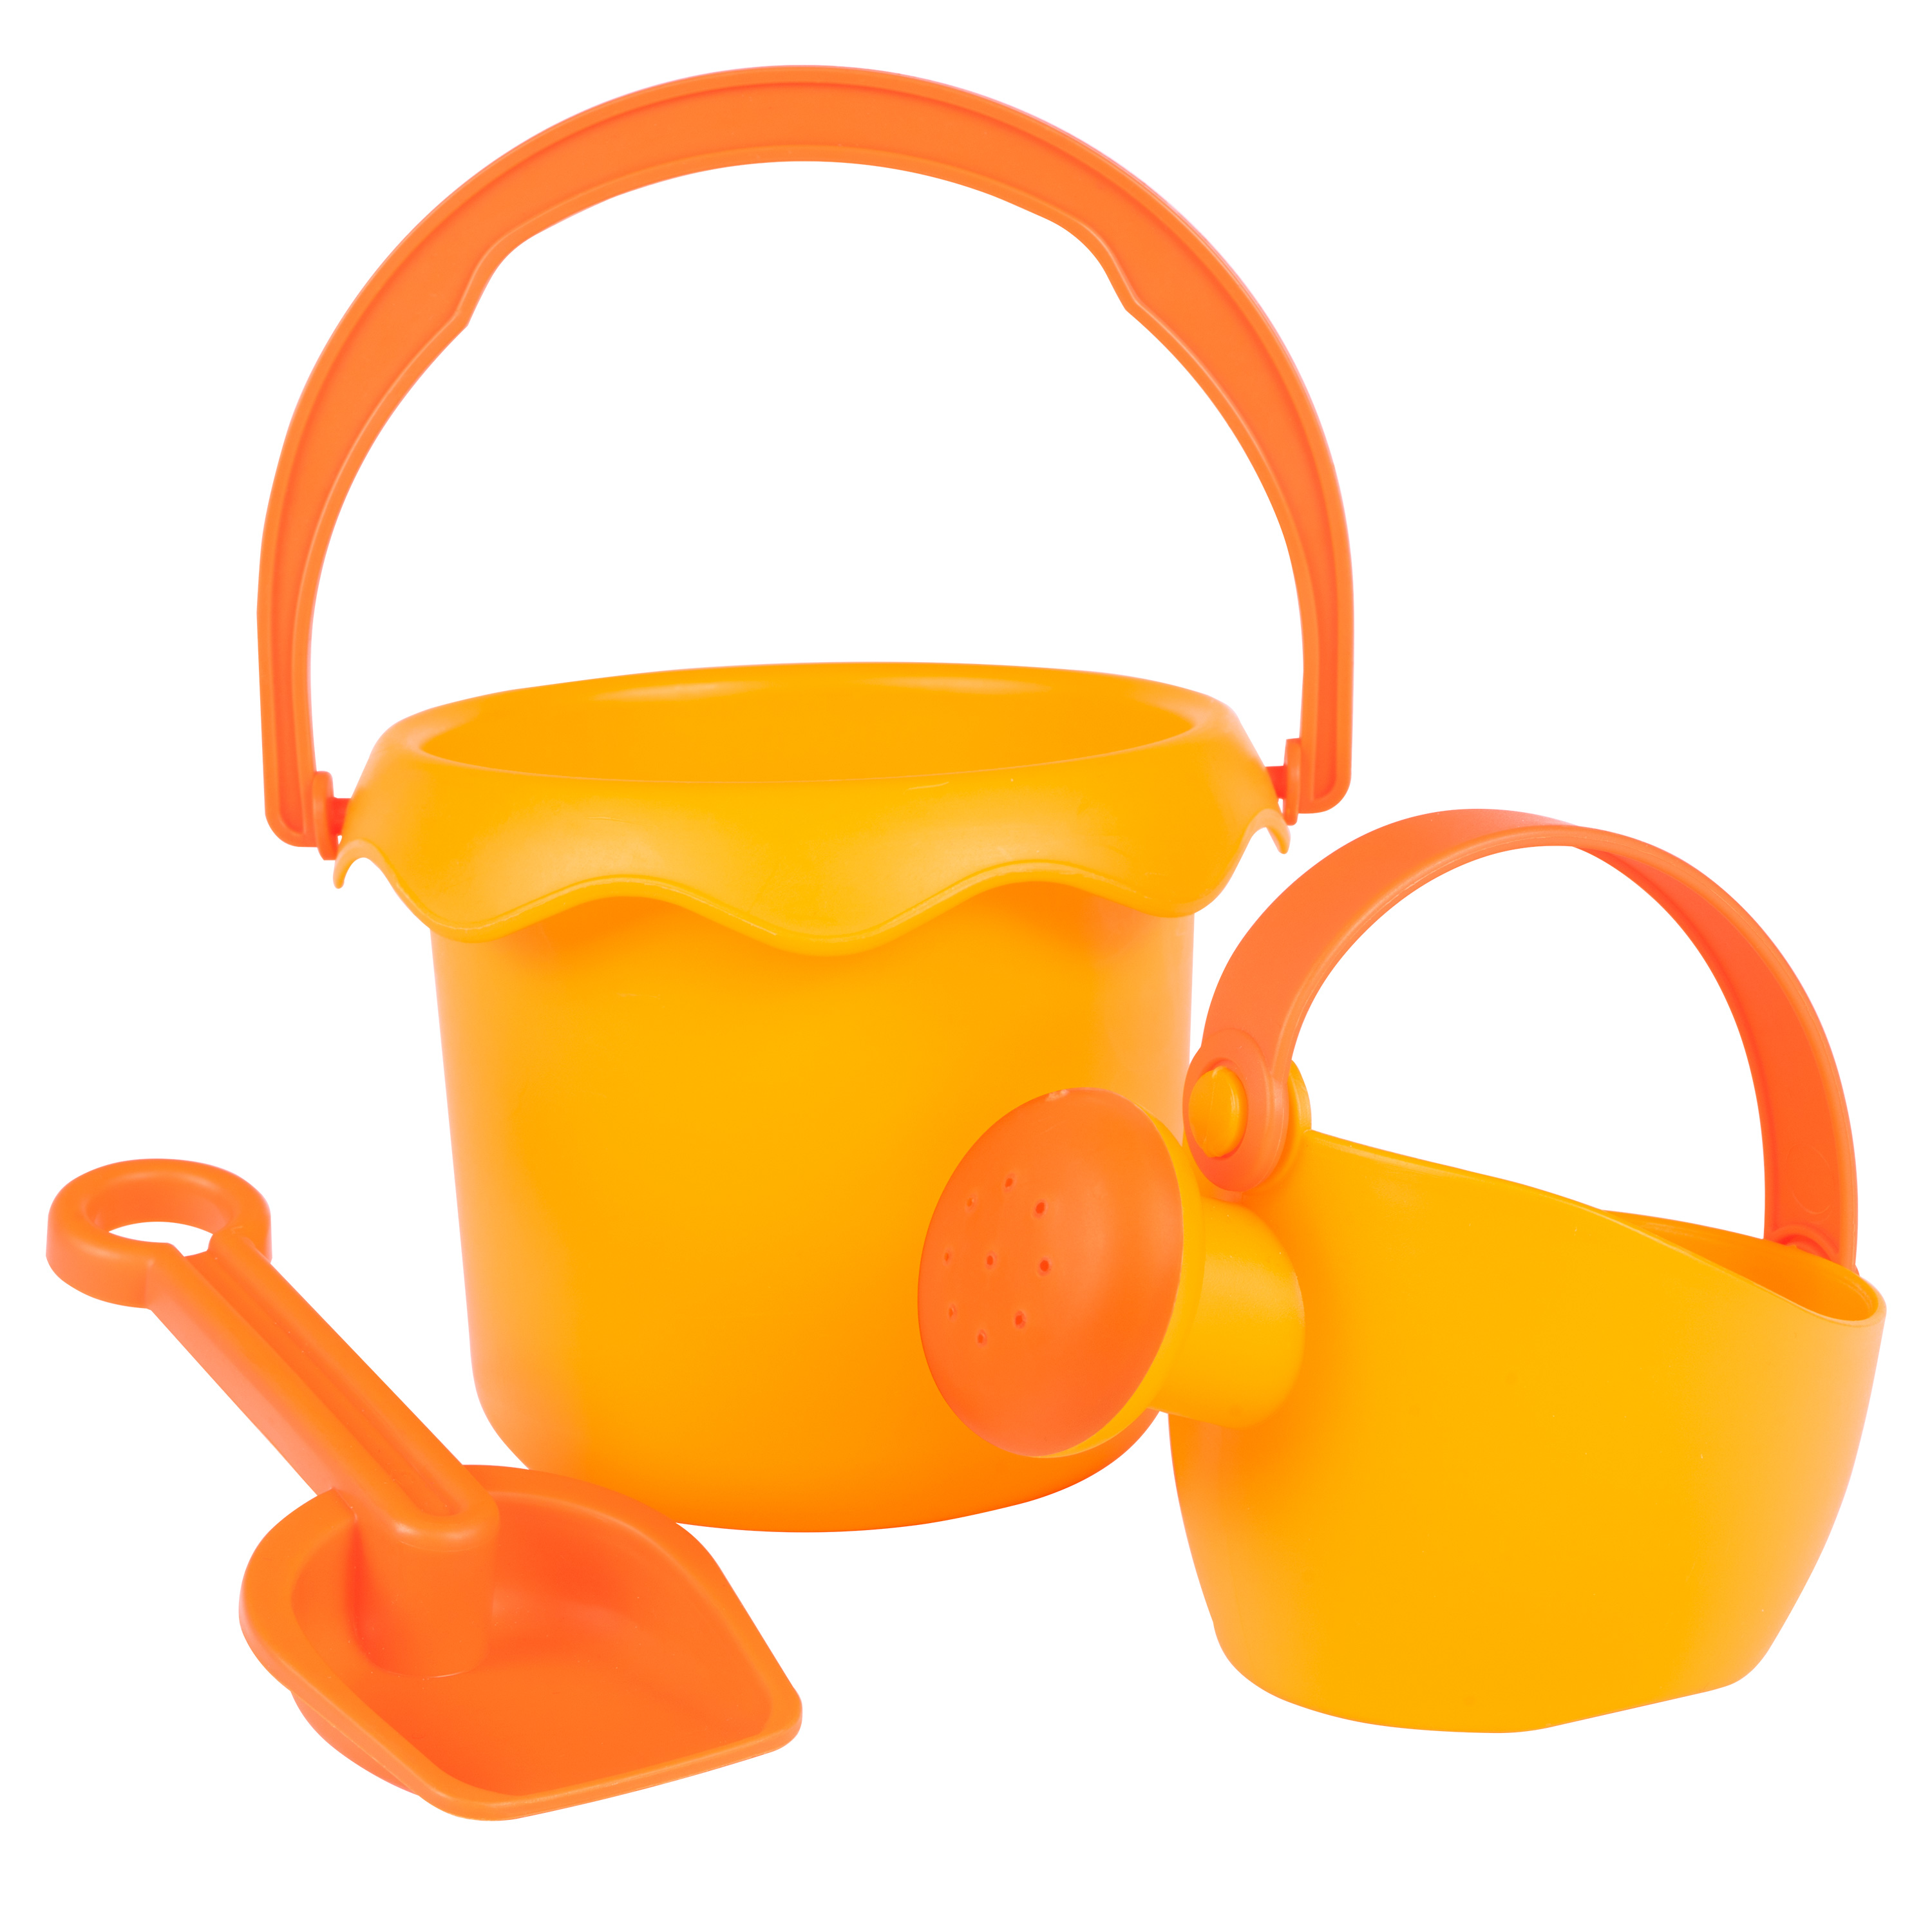 JKK Sandspielzeug-Set 'Soft' orange, 3-teilig